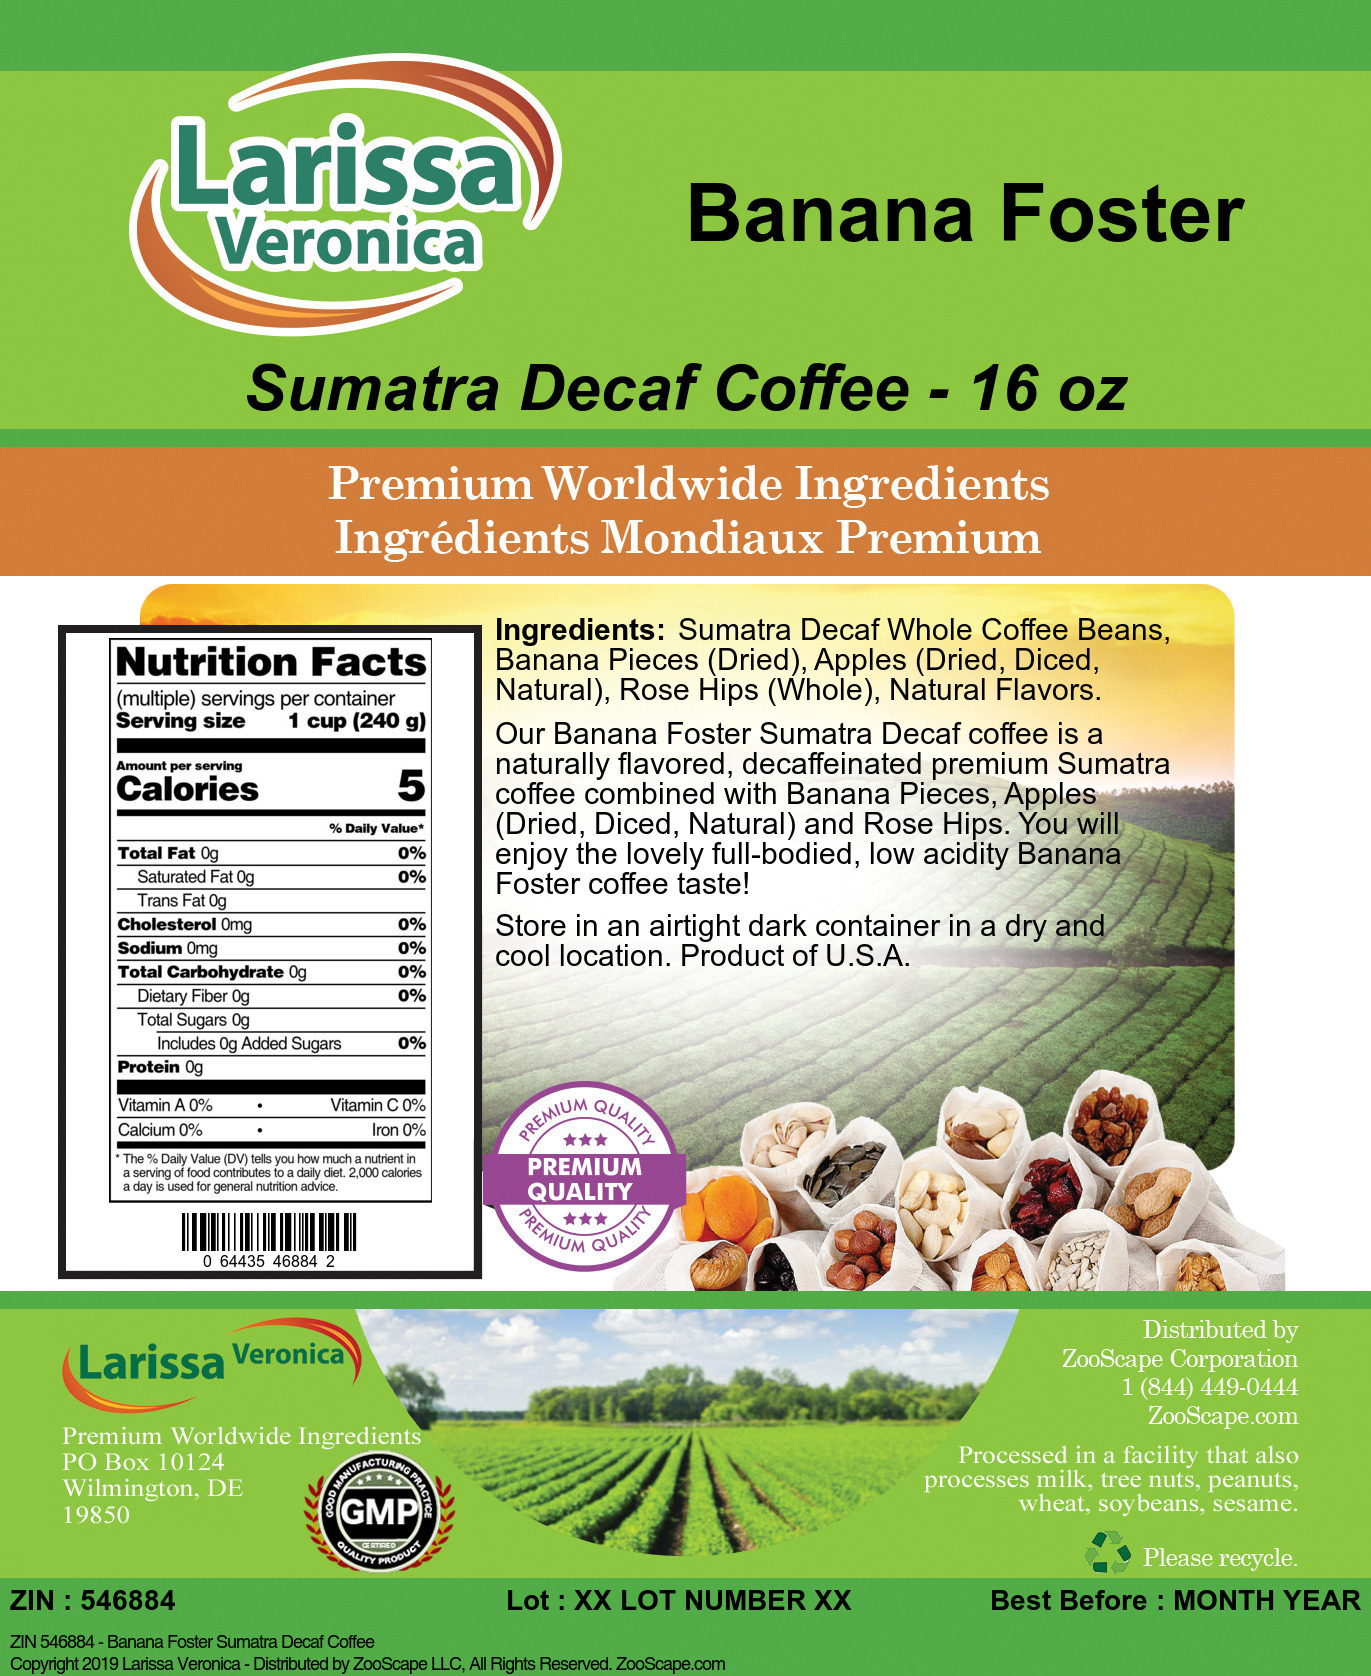 Banana Foster Sumatra Decaf Coffee - Label